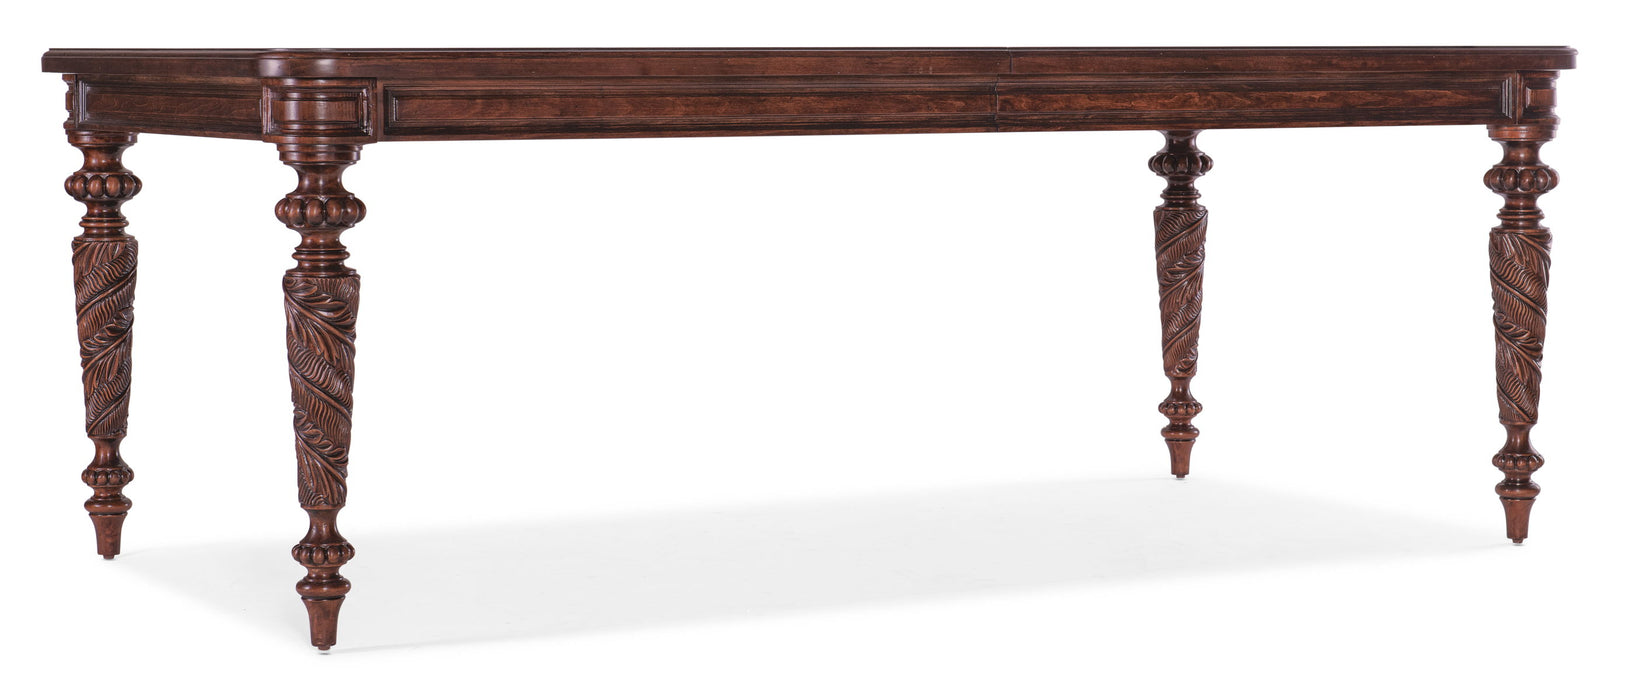 Charleston - Round Pedestal Wood Dining Table With 1-20in leaf - Dark Brown